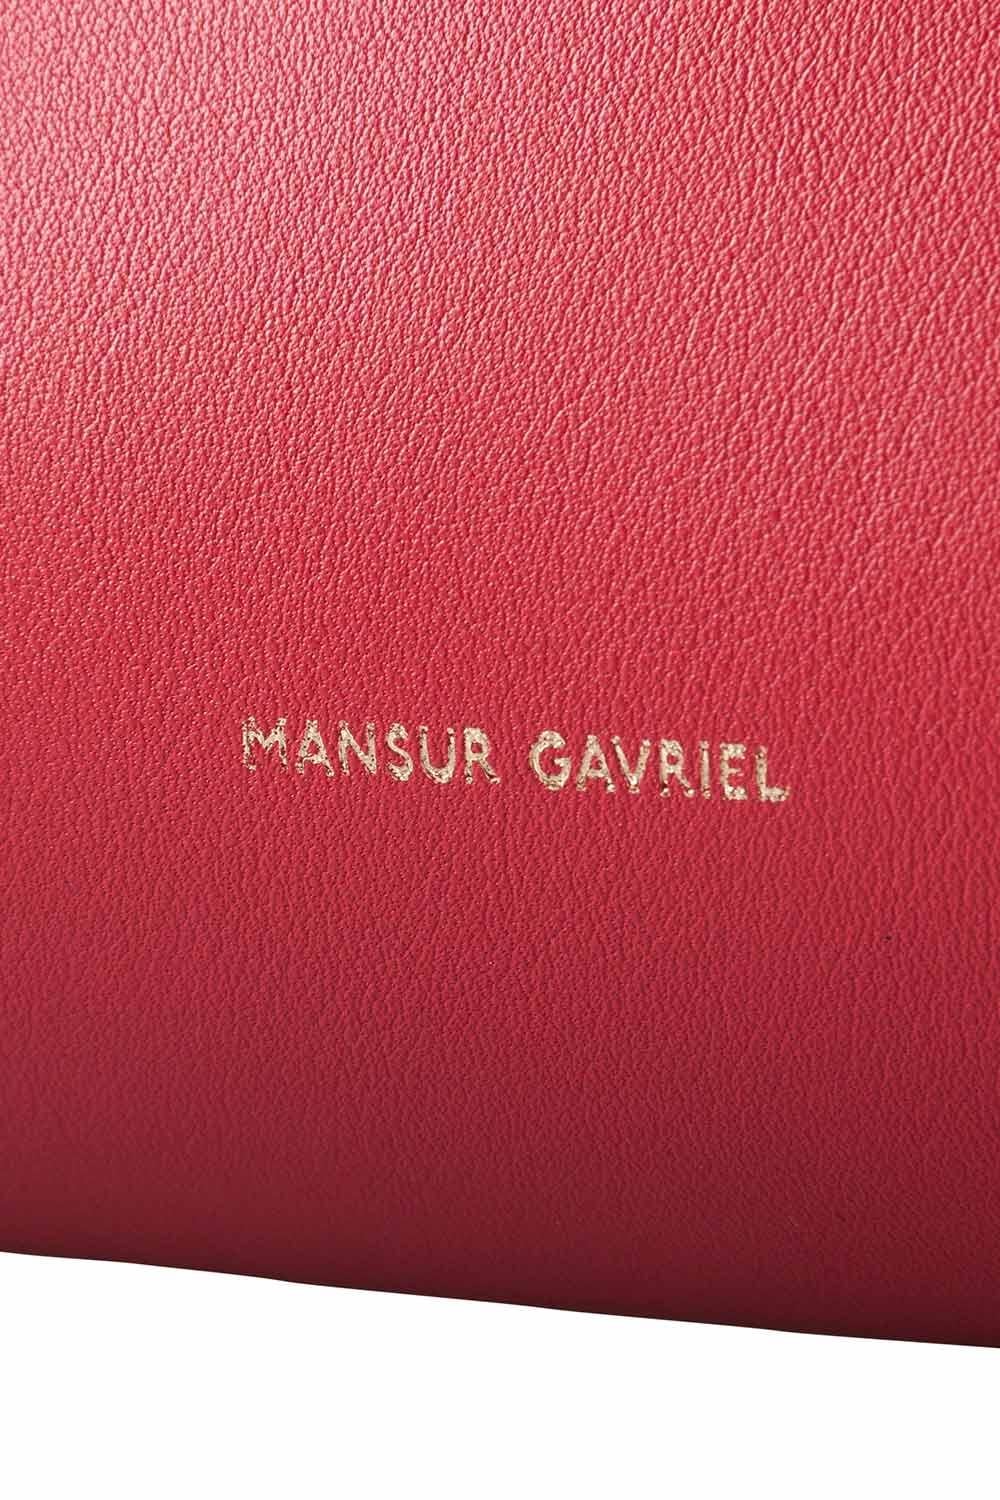 Mansur Gavriel Flamma/Flamma Leather Large Tote 3